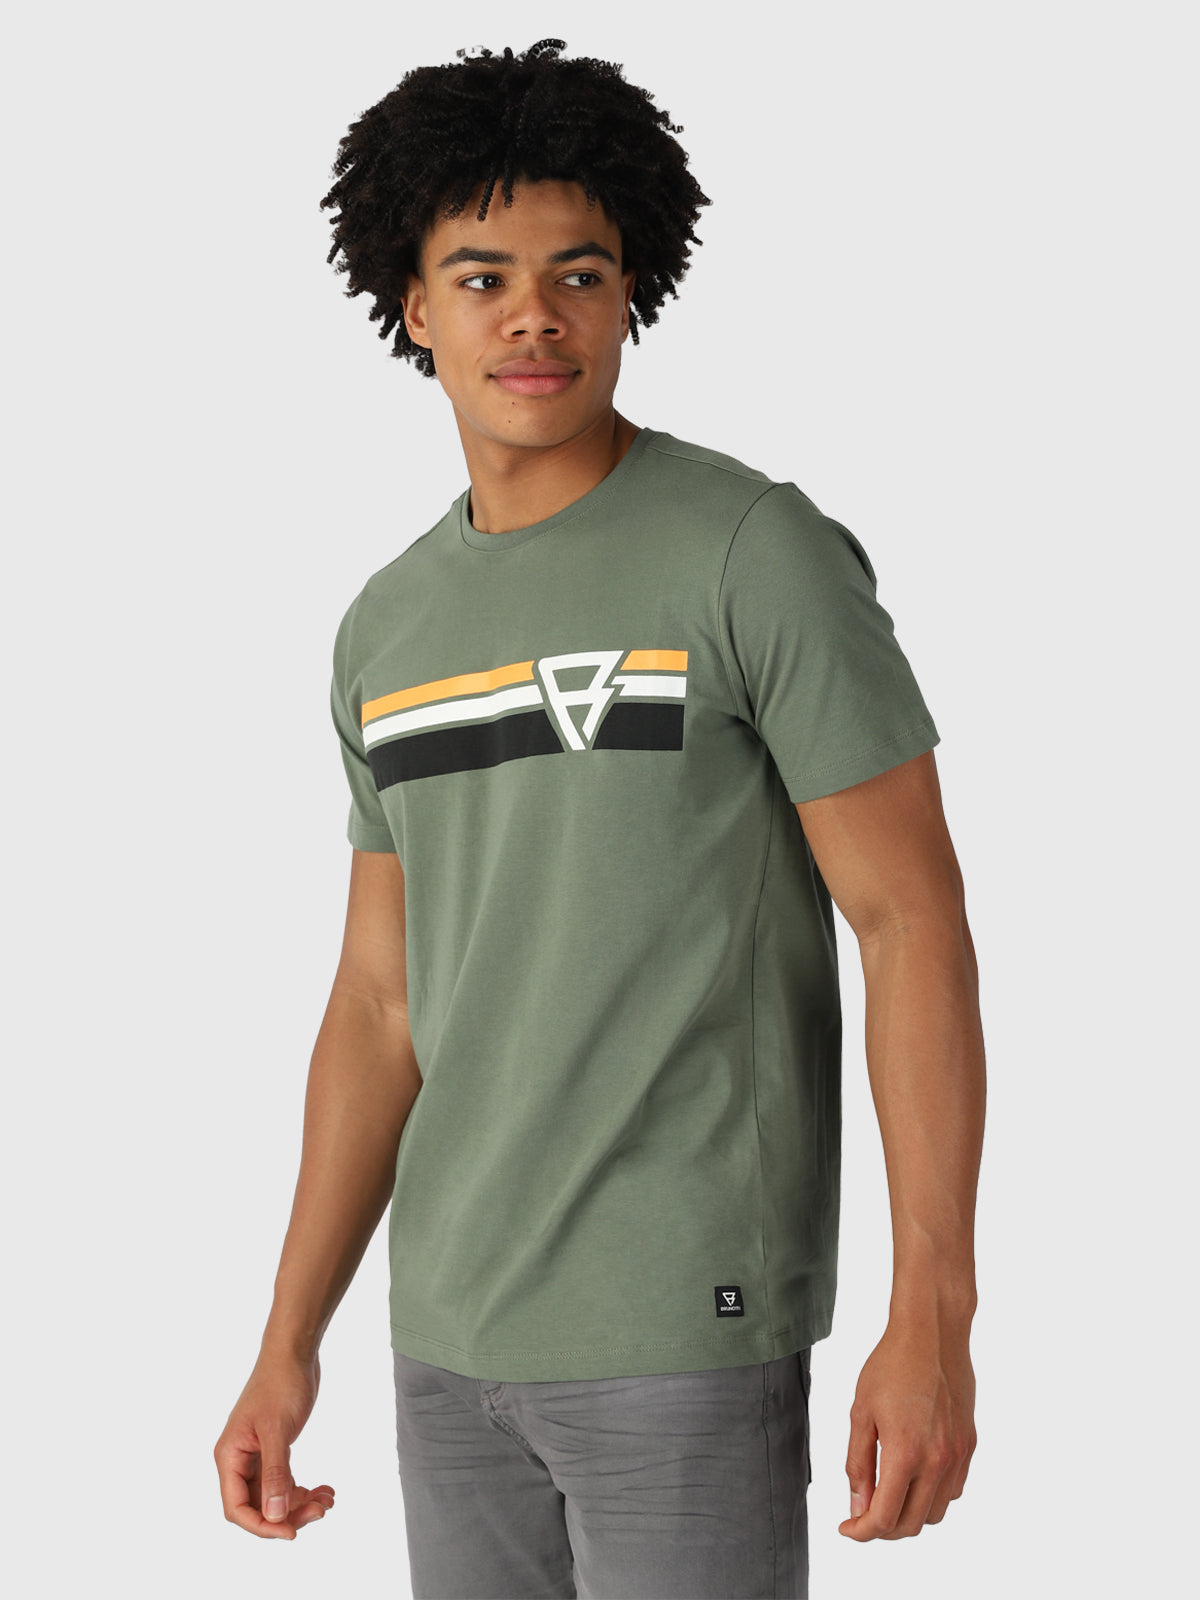 Timo-R Herren T-Shirt | Grün